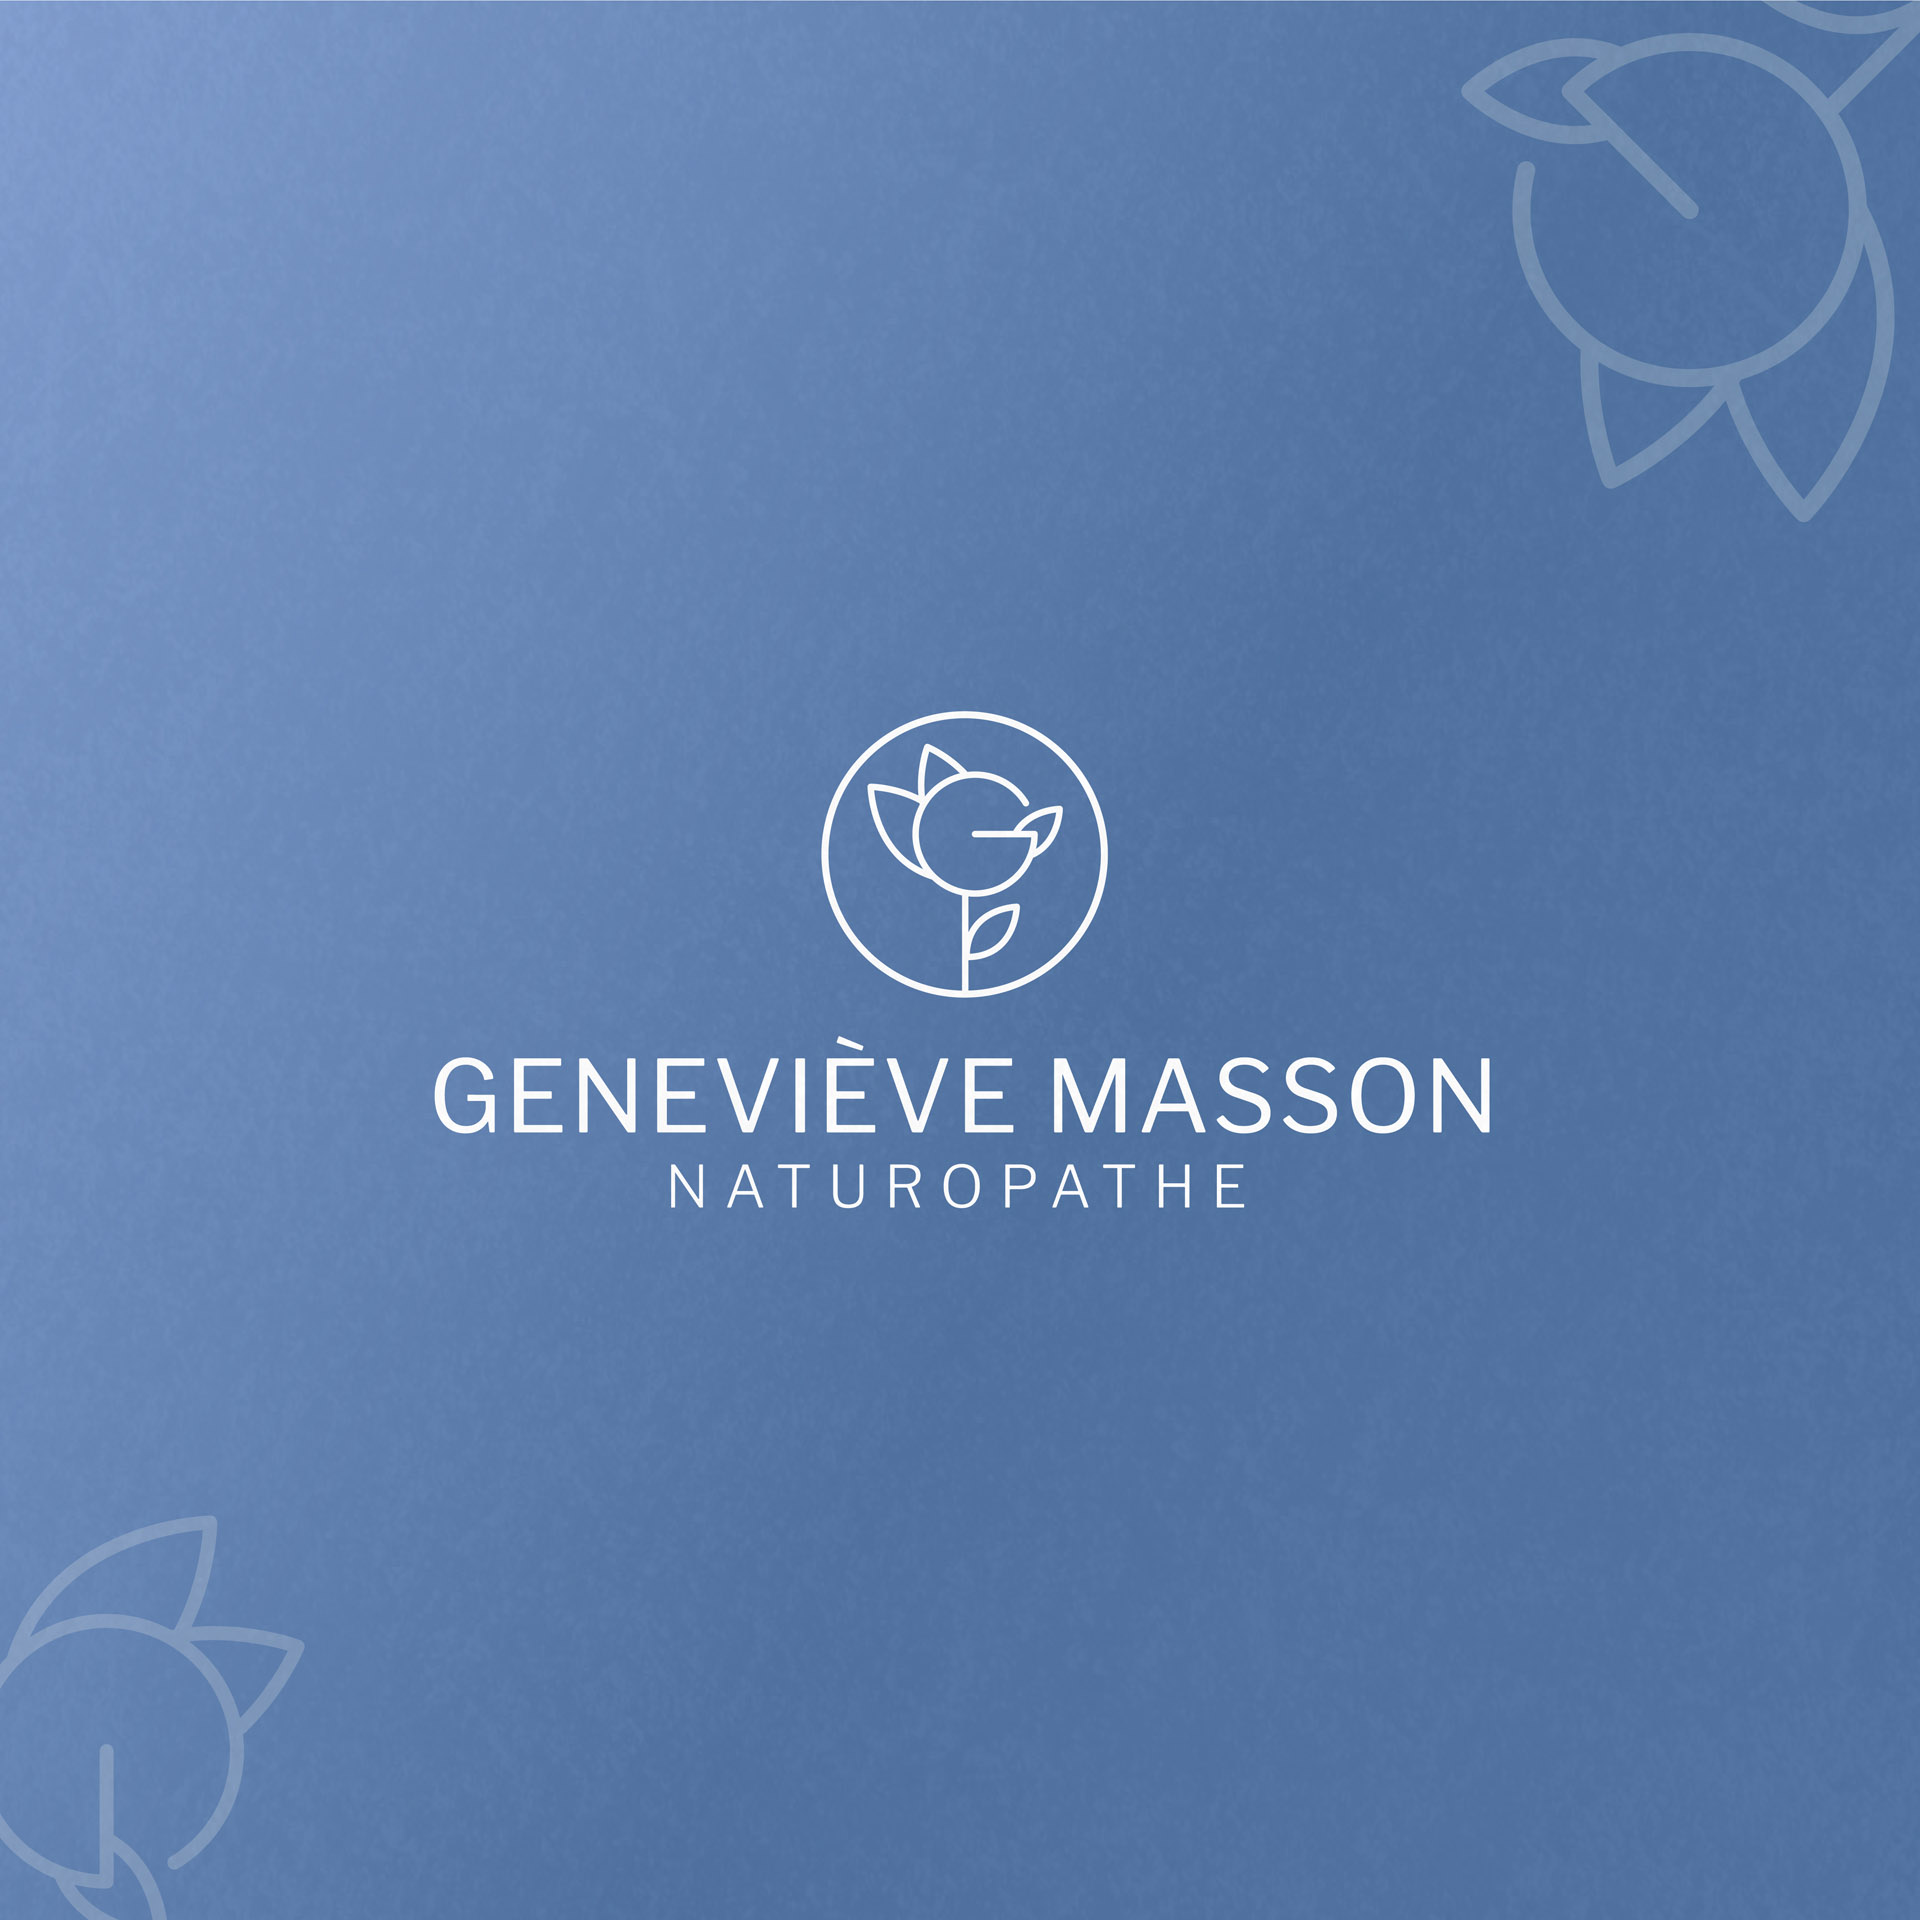 GENEVIÈVE MASSON NATUROPATHE 3